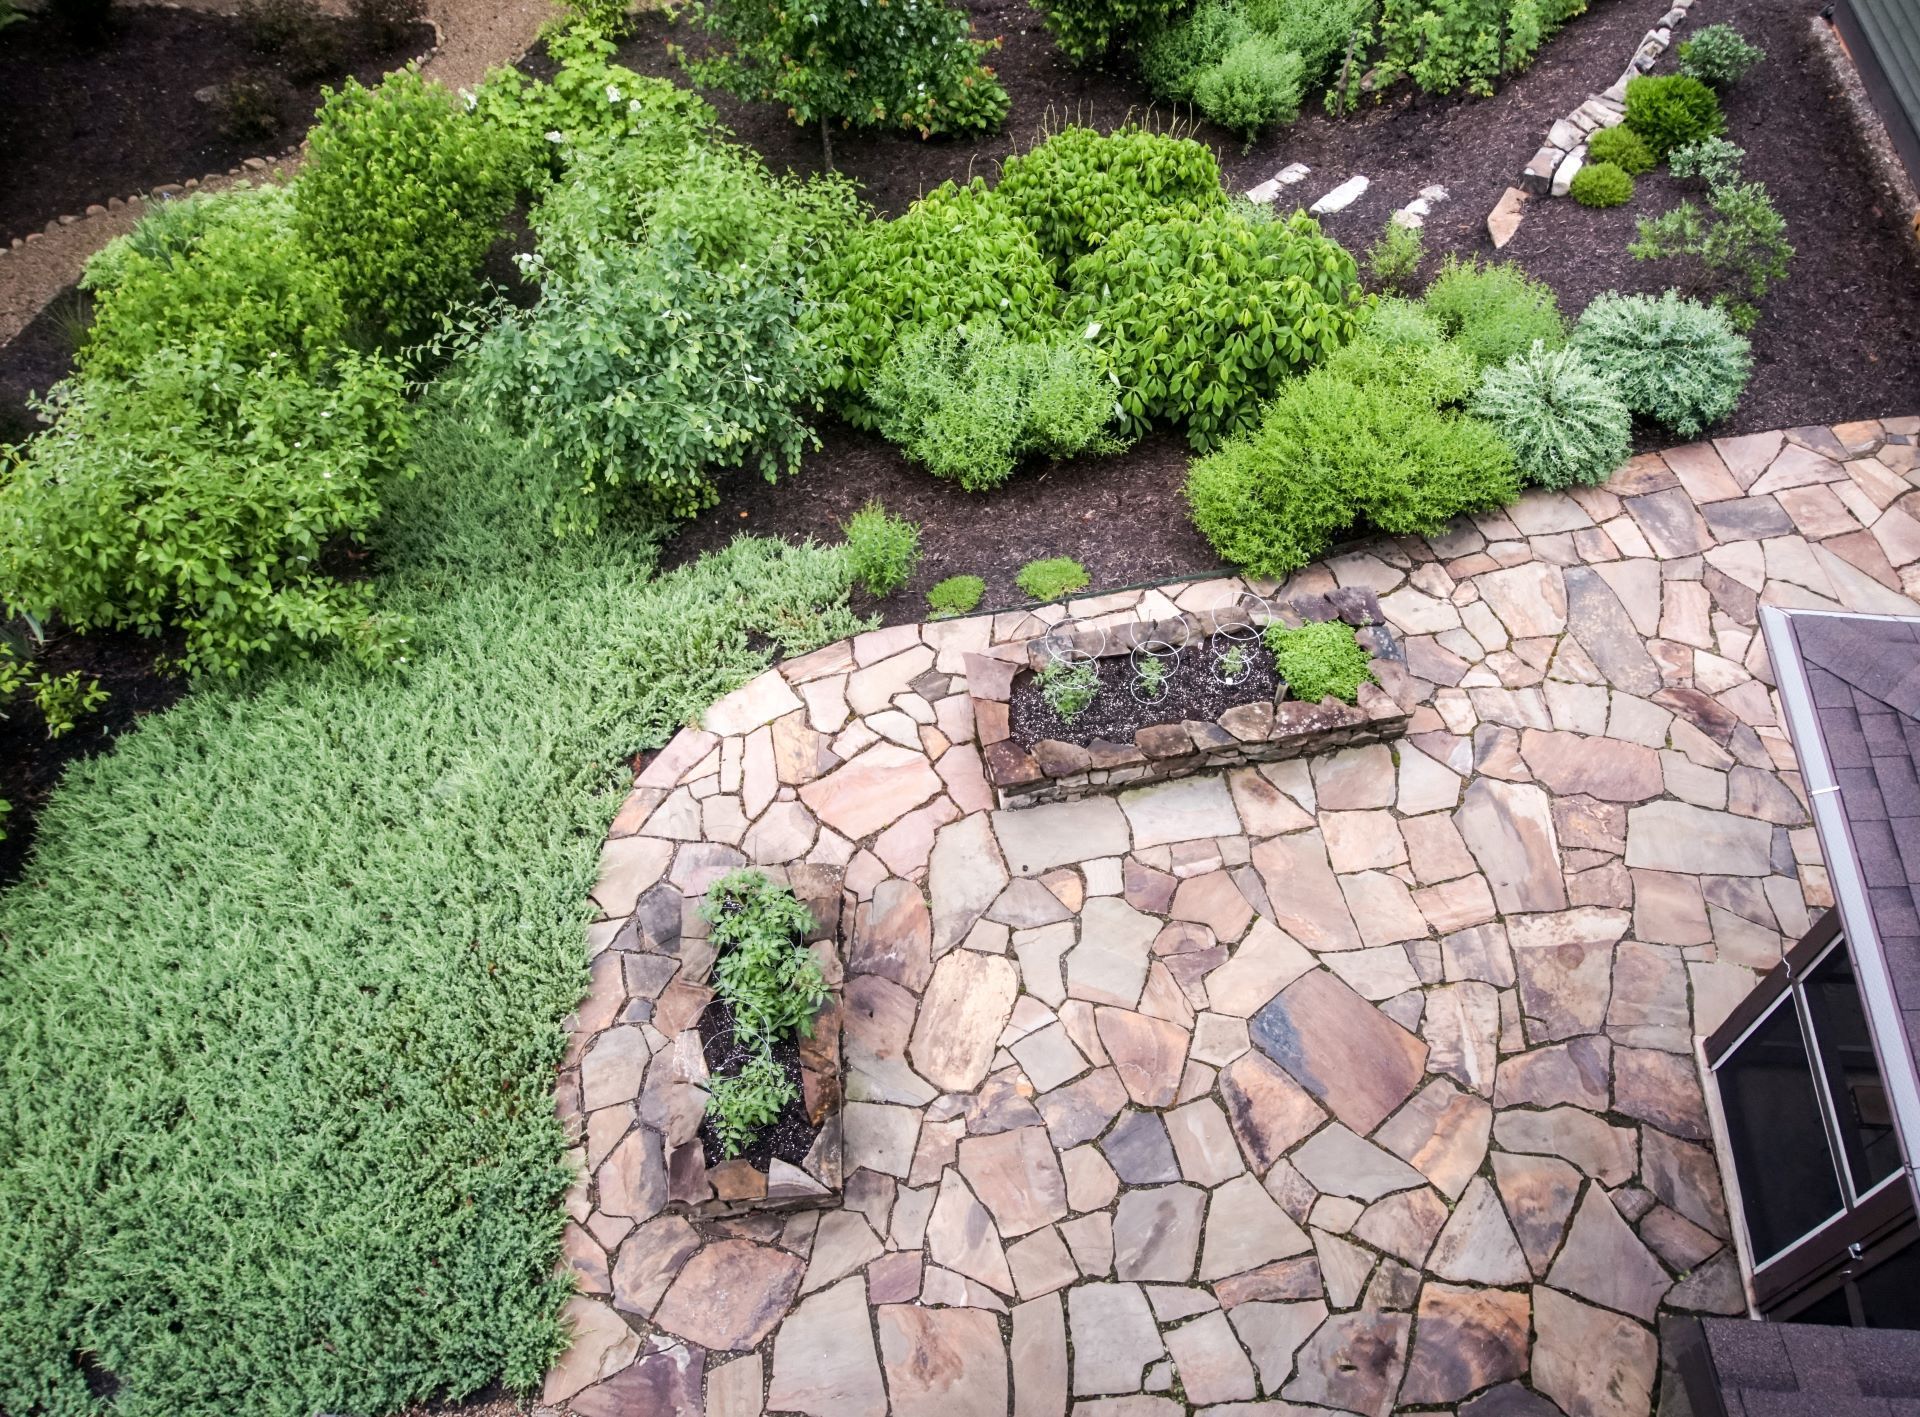 bird's eye view photo of a garden and patio with flagstone